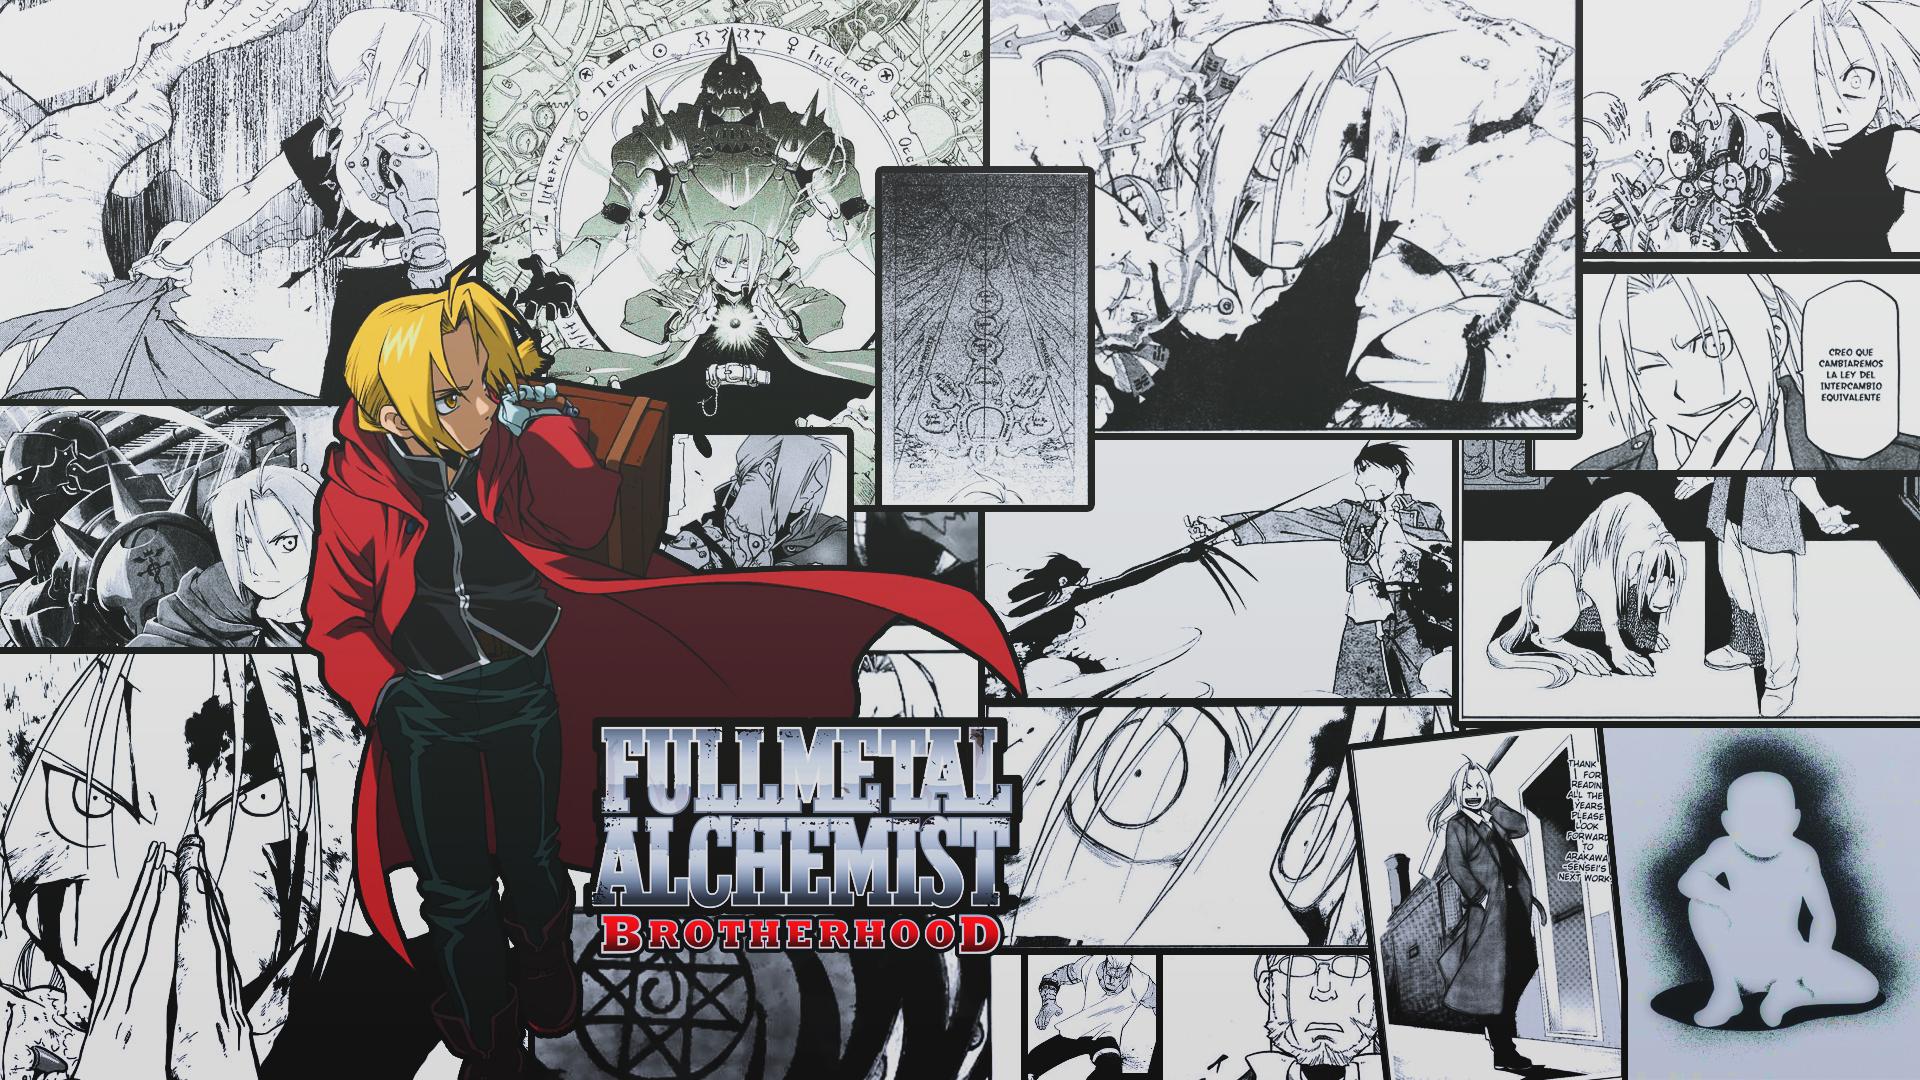 Fullmetal Alchemist Brotherhood Wallpaper 1080P Brotherhood hd ...